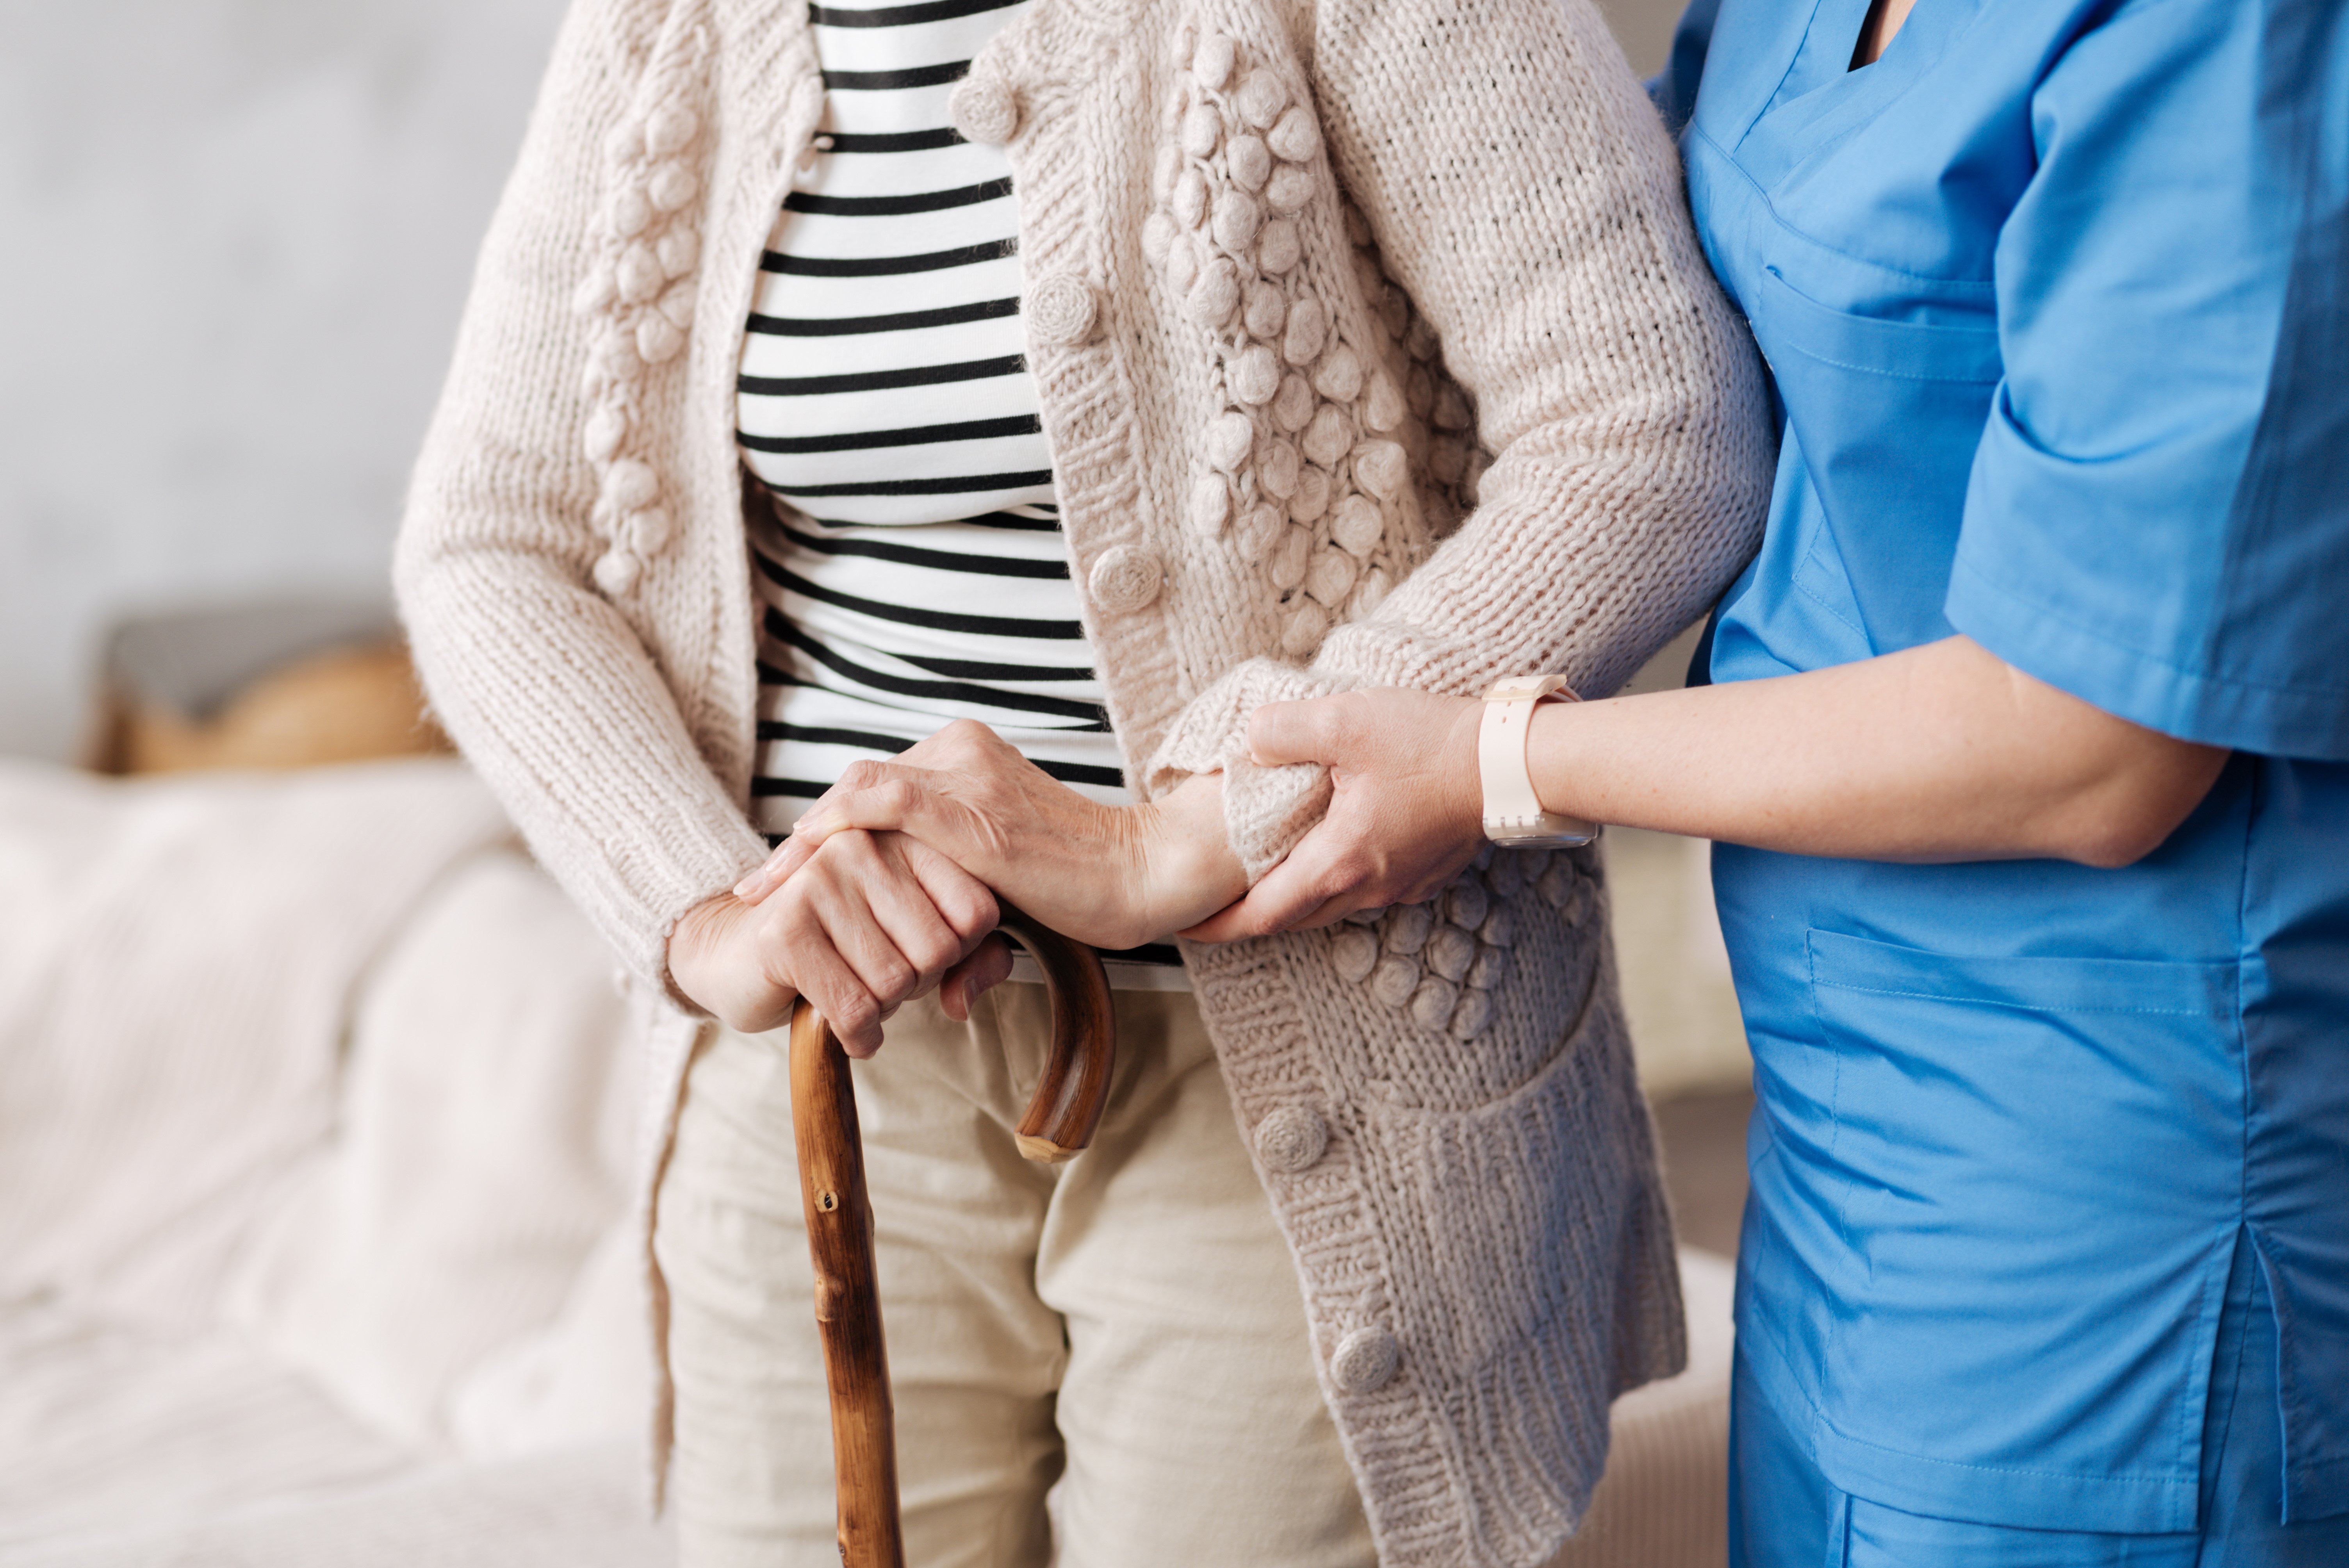 Infirmière douée aidant un patient mature.  | Photo : Shutterstock